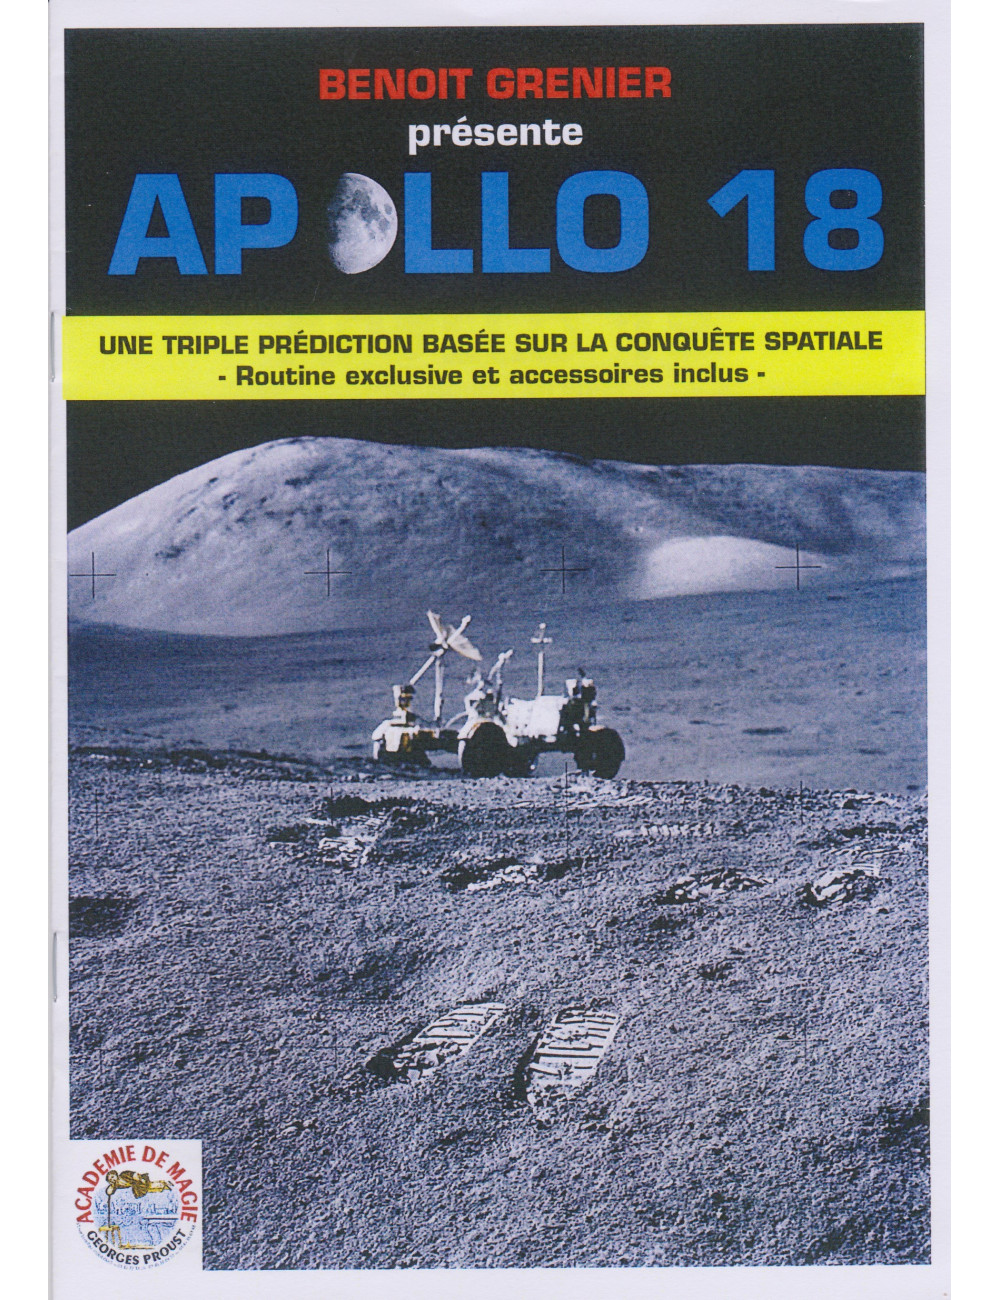 Apollo 18, de Benoit Grenier